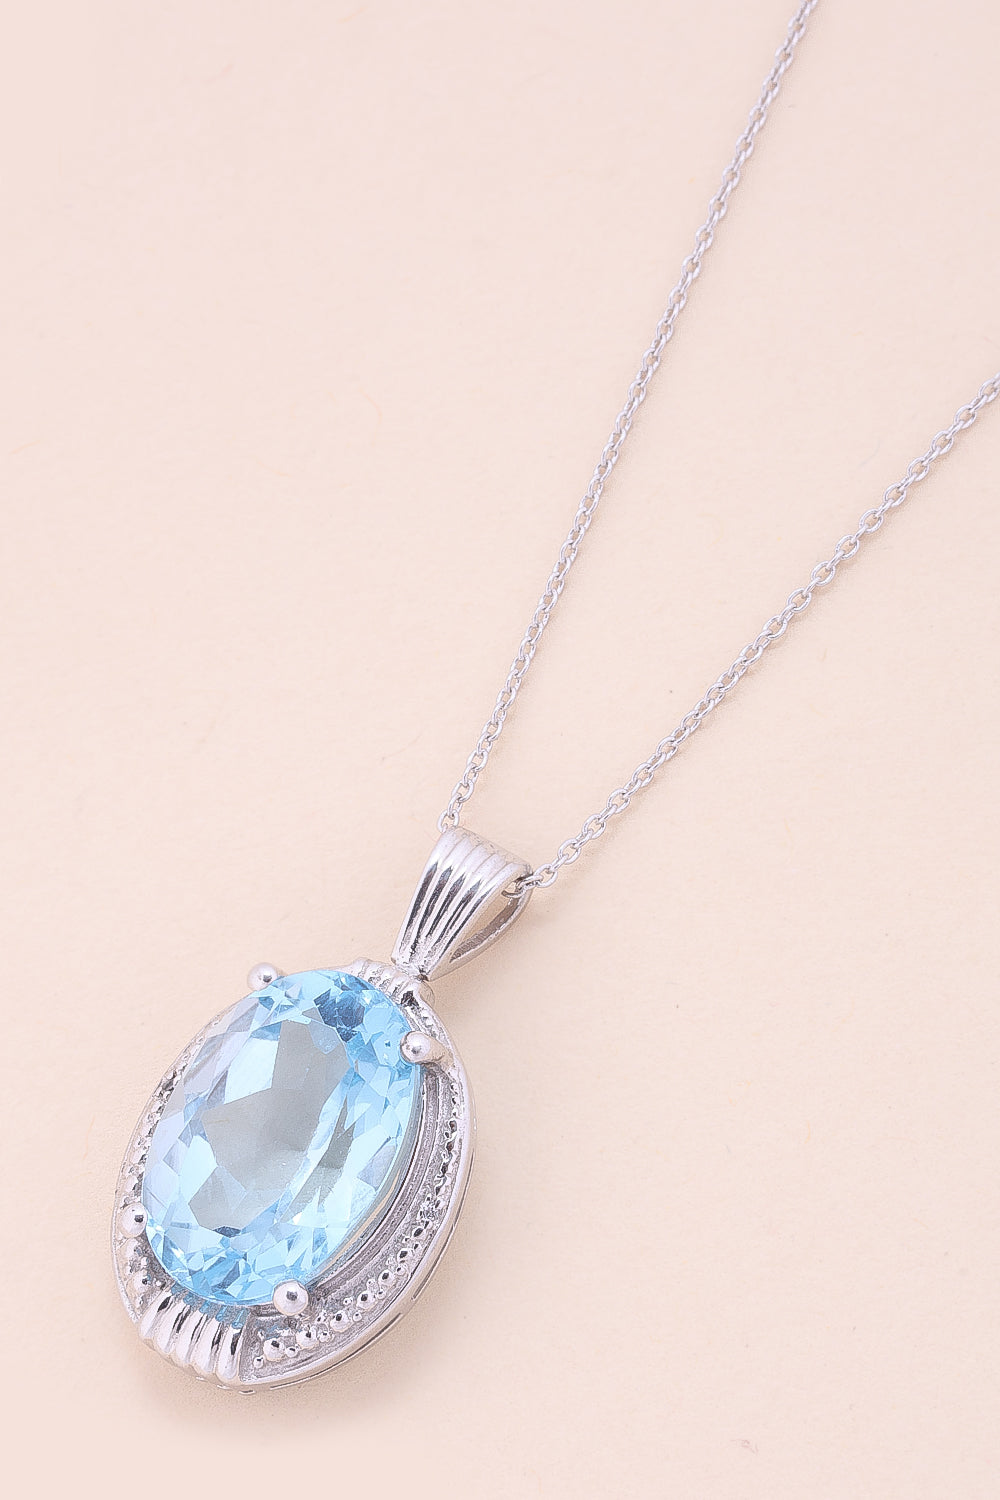 Blue & White Topaz Silver Necklace Pendant Chain-Avishya